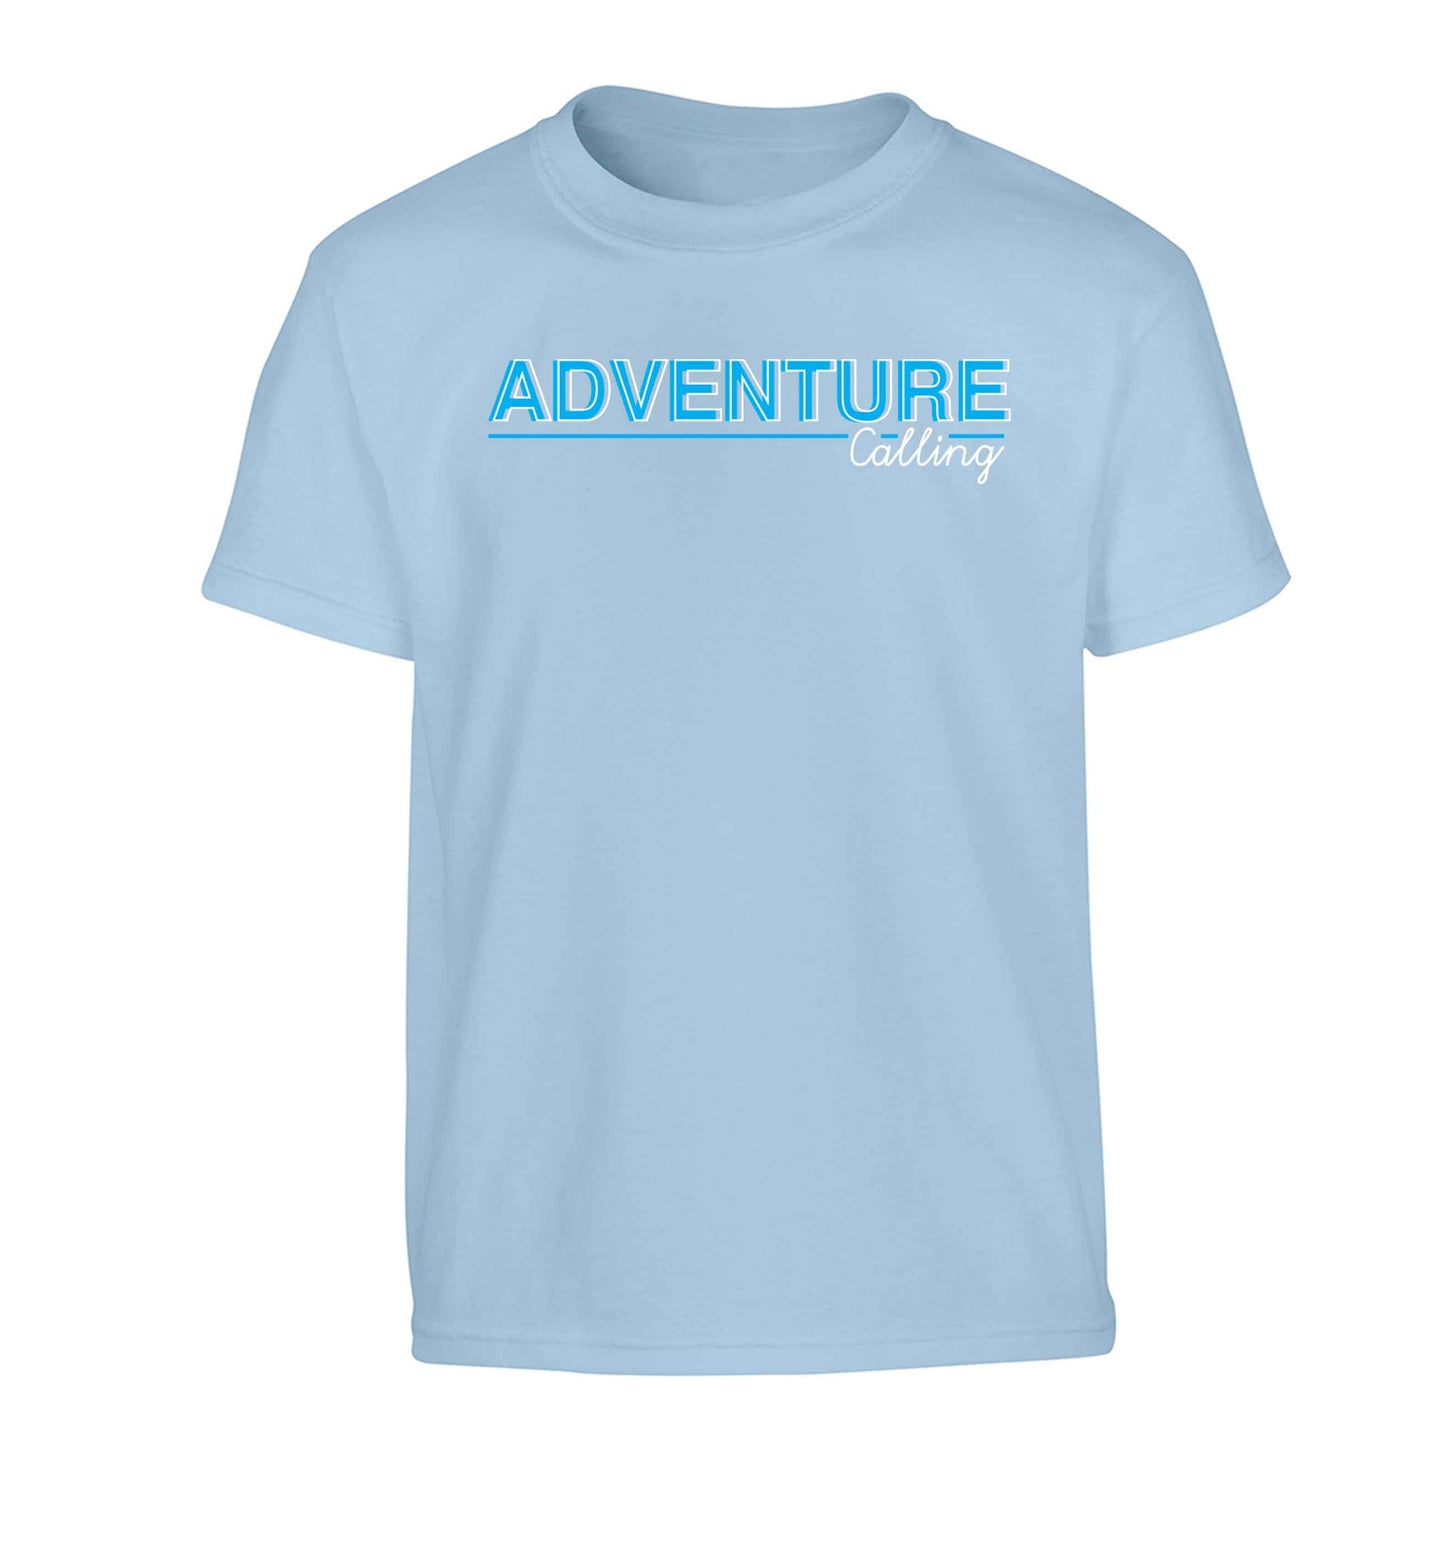 Adventure calling Children's light blue Tshirt 12-13 Years